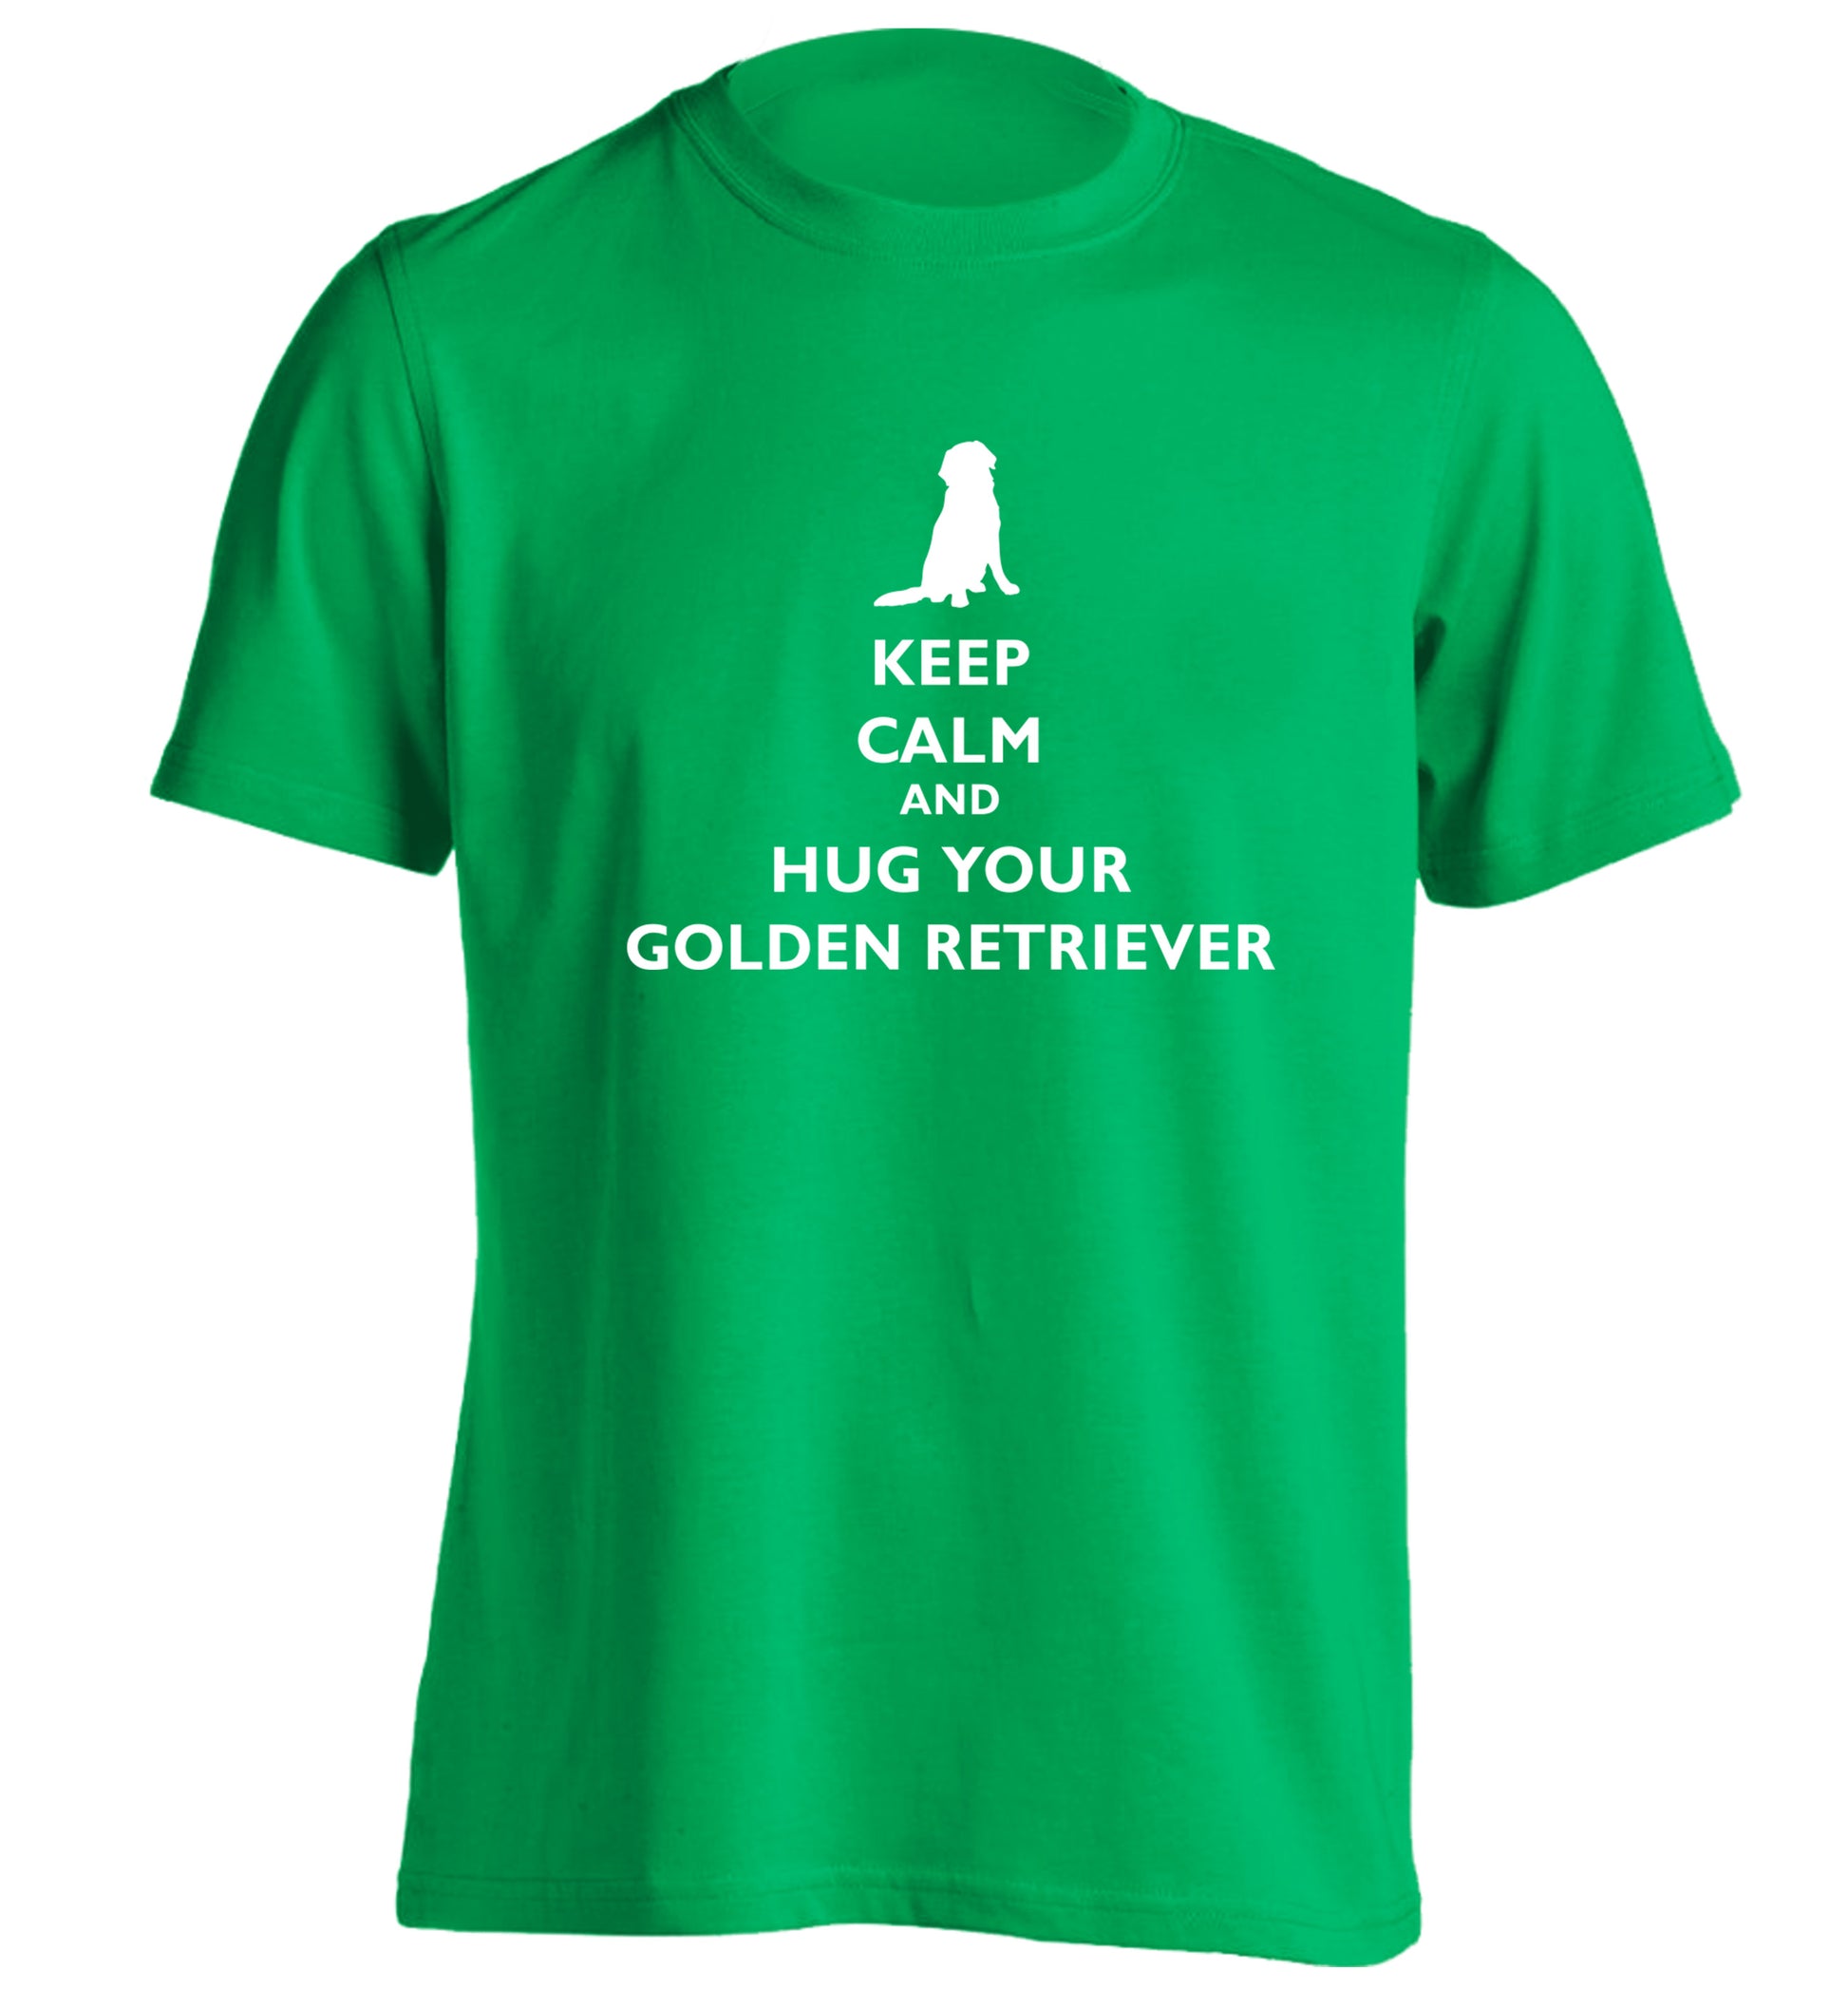 Keep calm and hug your golden retriever adults unisex green Tshirt 2XL